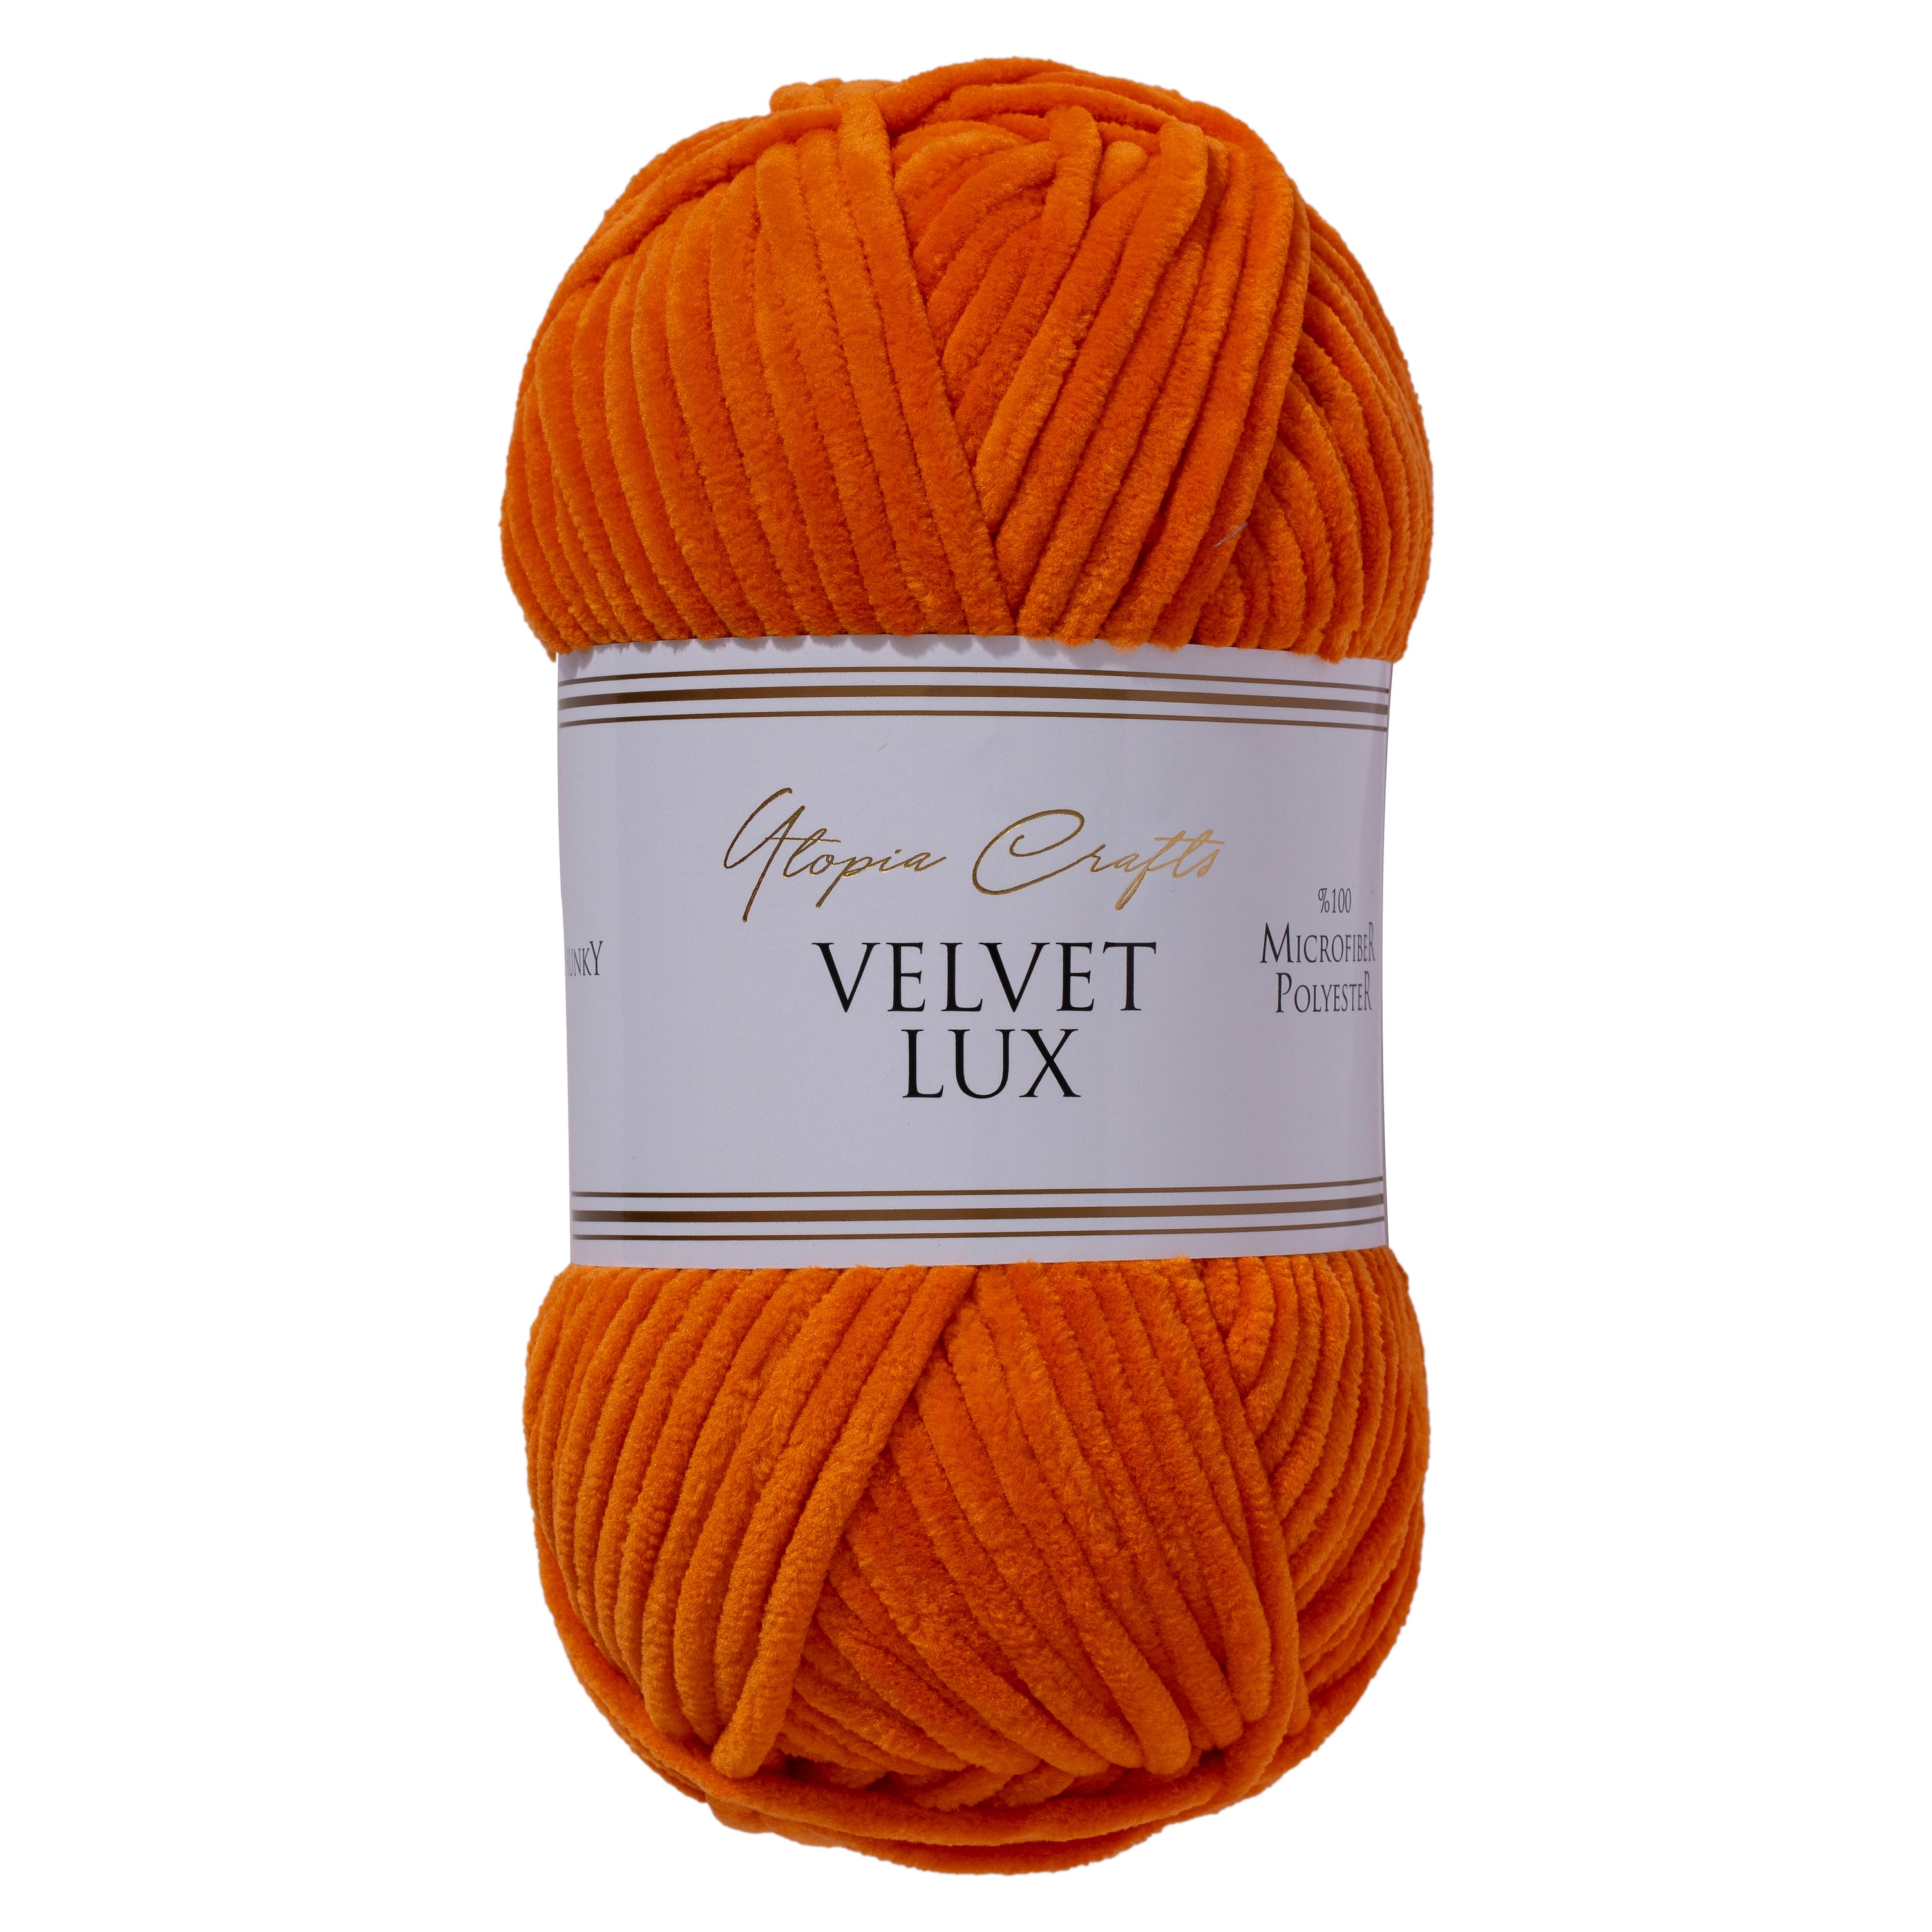 Utopia Crafts Velvet Lux Chenille Super Soft Chunky Yarn for Knitting and Crochet, 100g - 110m (Rusty Orange)